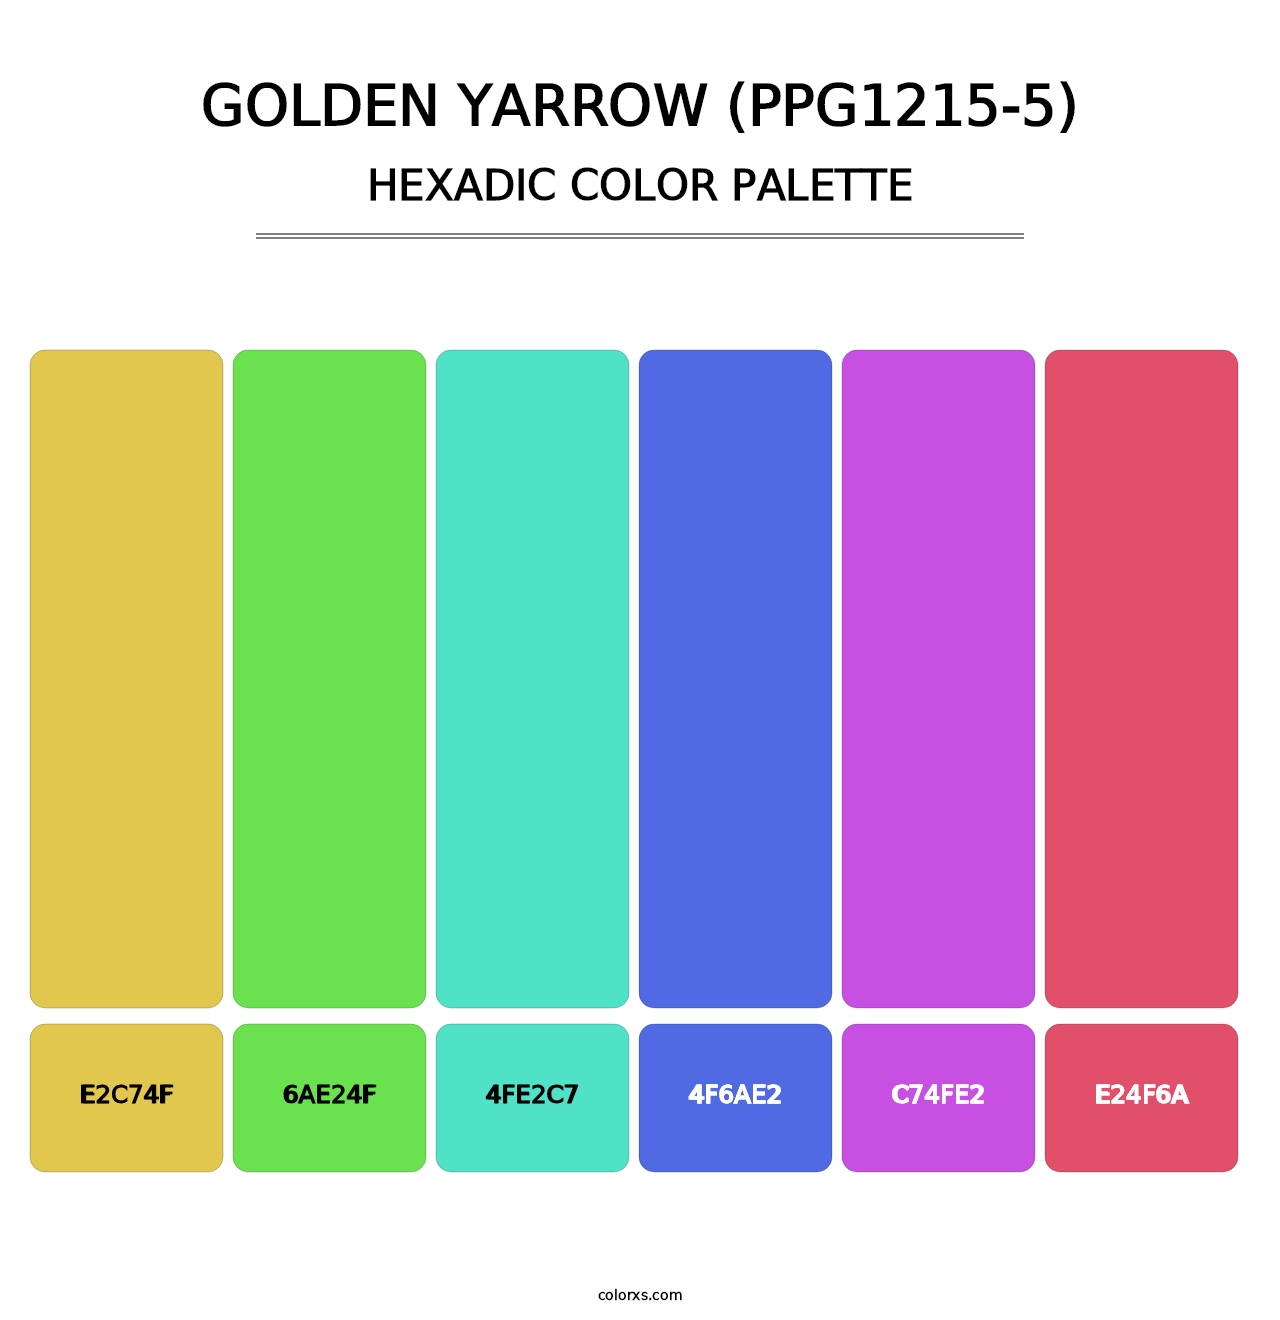 Golden Yarrow (PPG1215-5) - Hexadic Color Palette